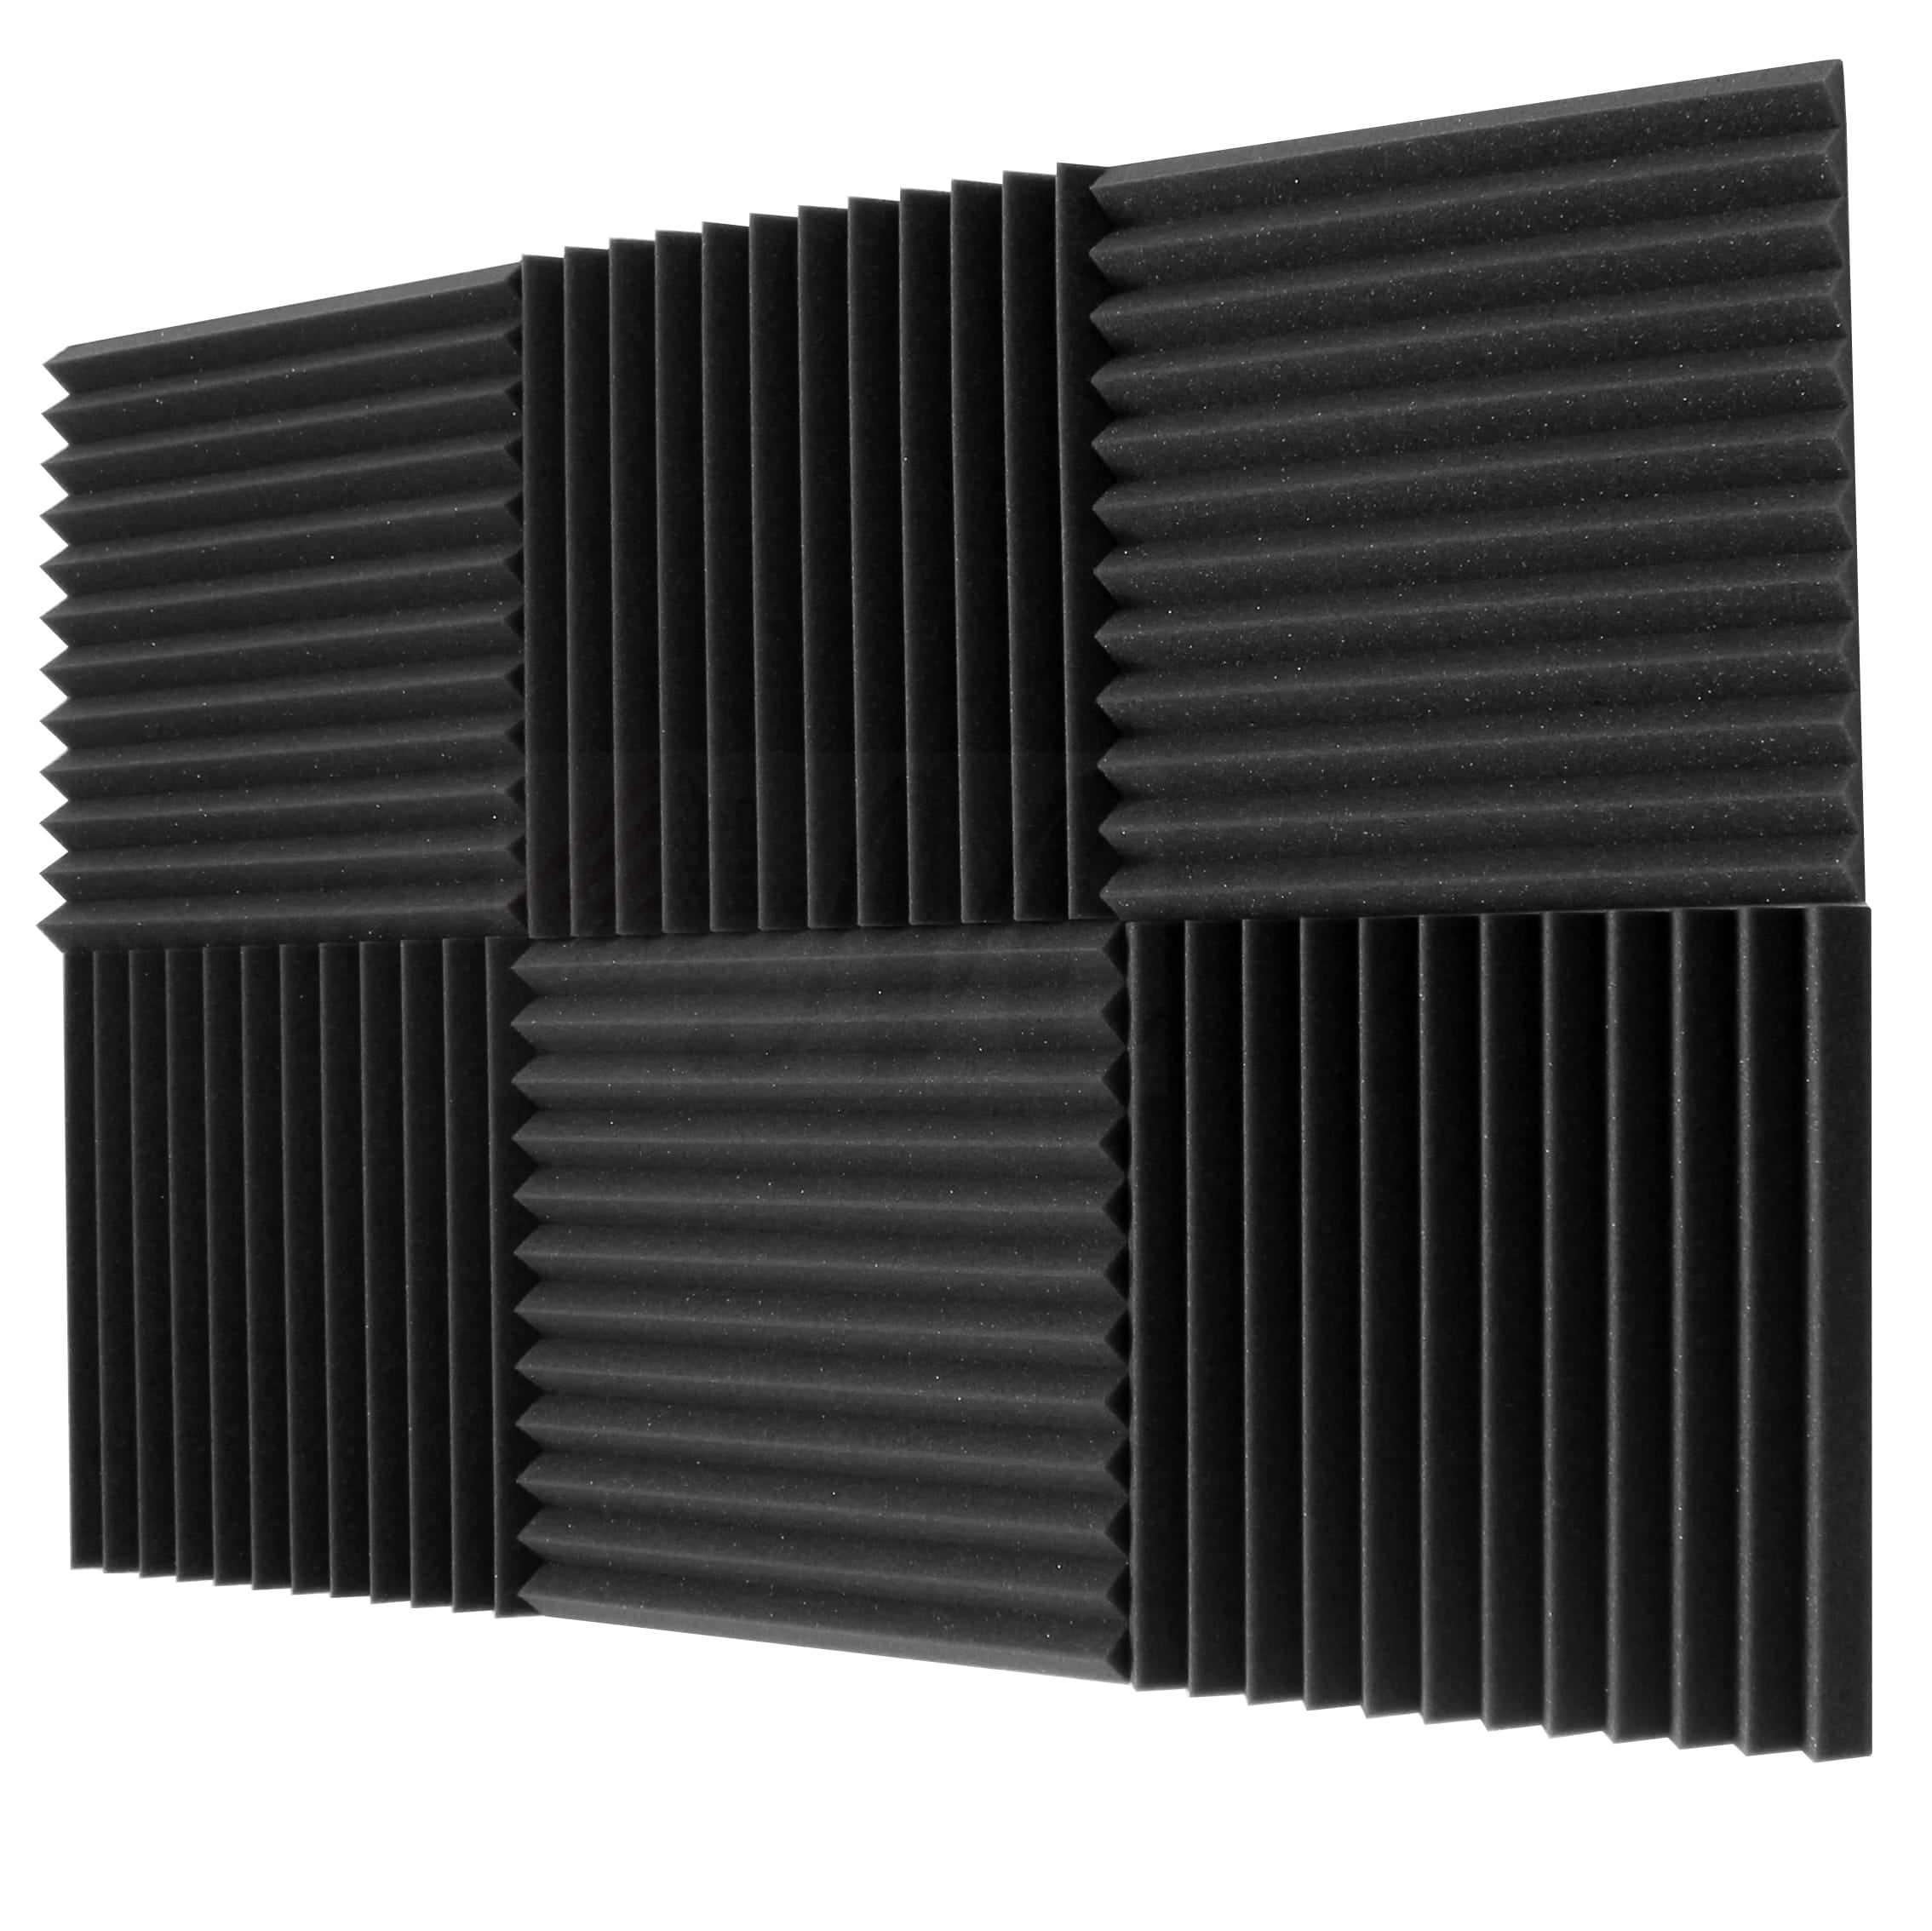 50pack, Black 50 Pack Ice Black Acoustic Panels Studio Foam Wedges 1 X 12 X 12 